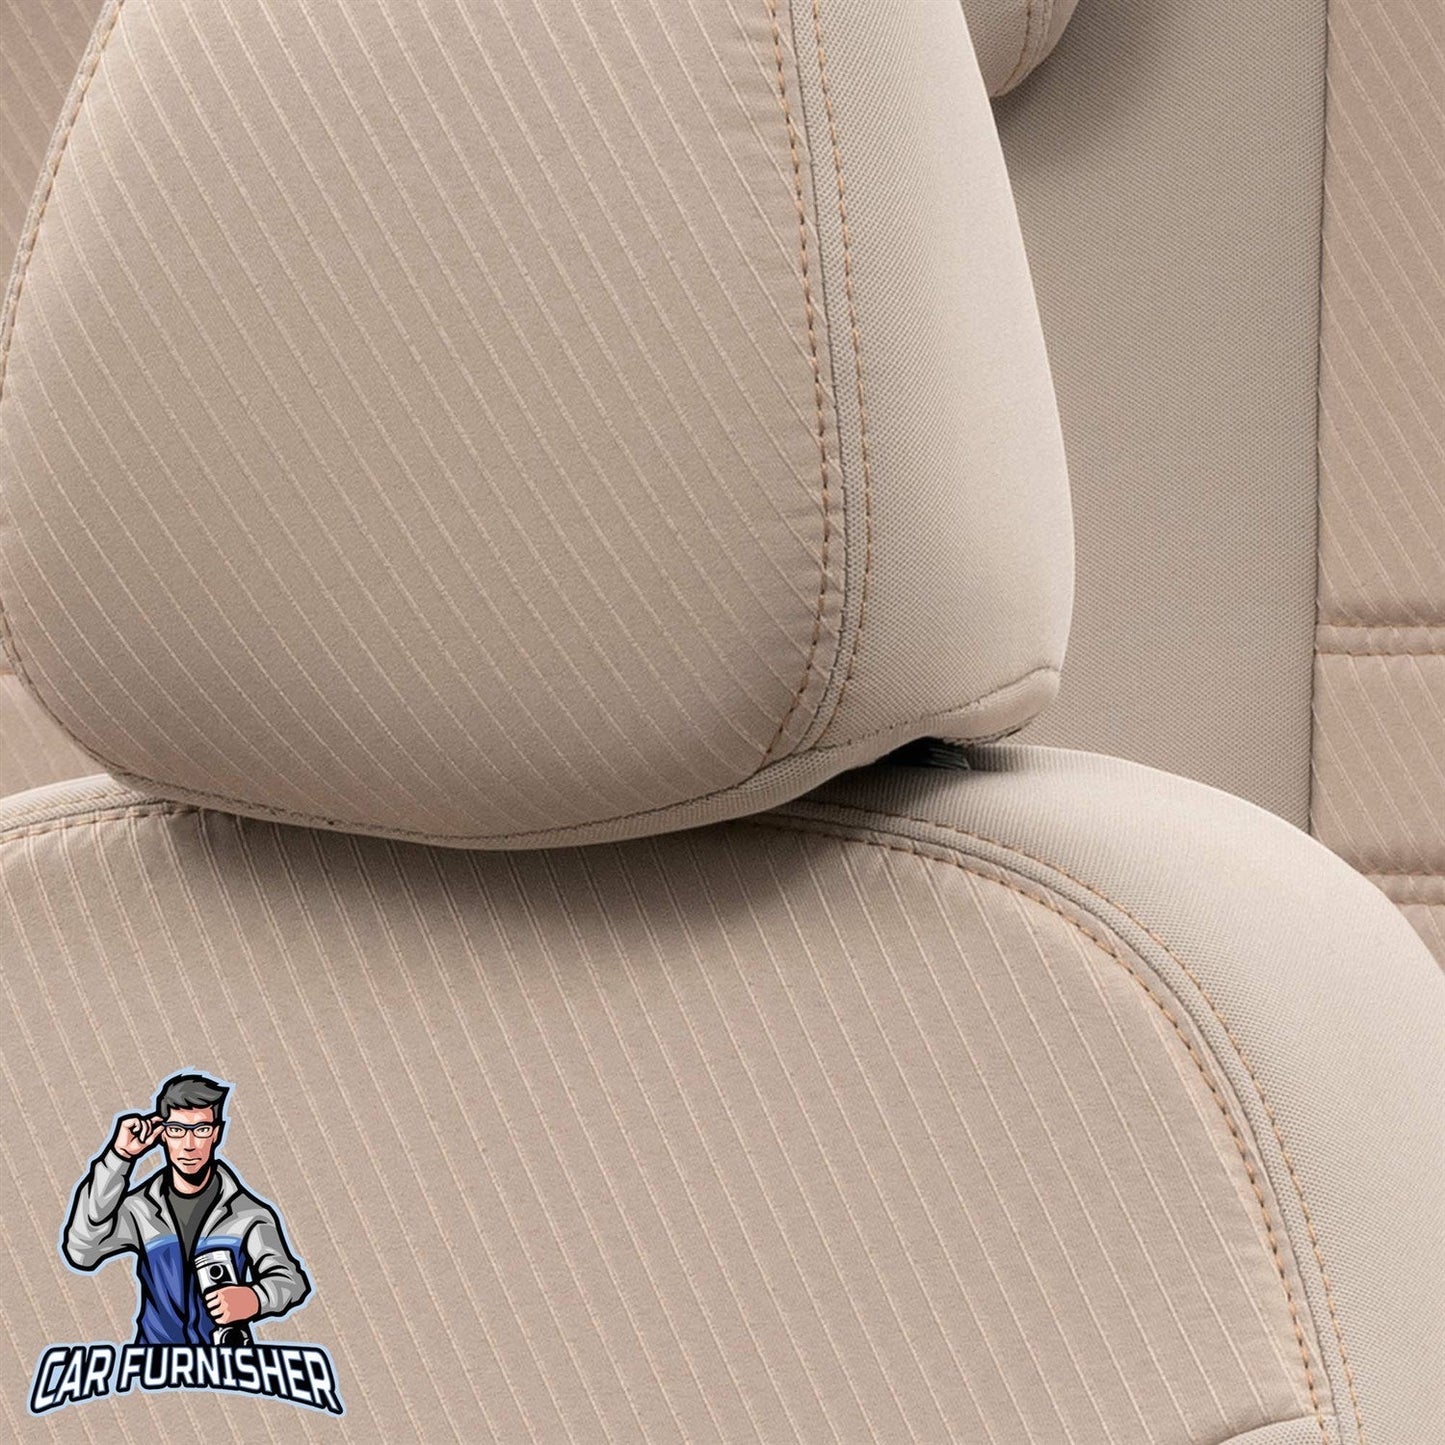 Renault Fluence Seat Covers Original Jacquard Design Dark Beige Jacquard Fabric